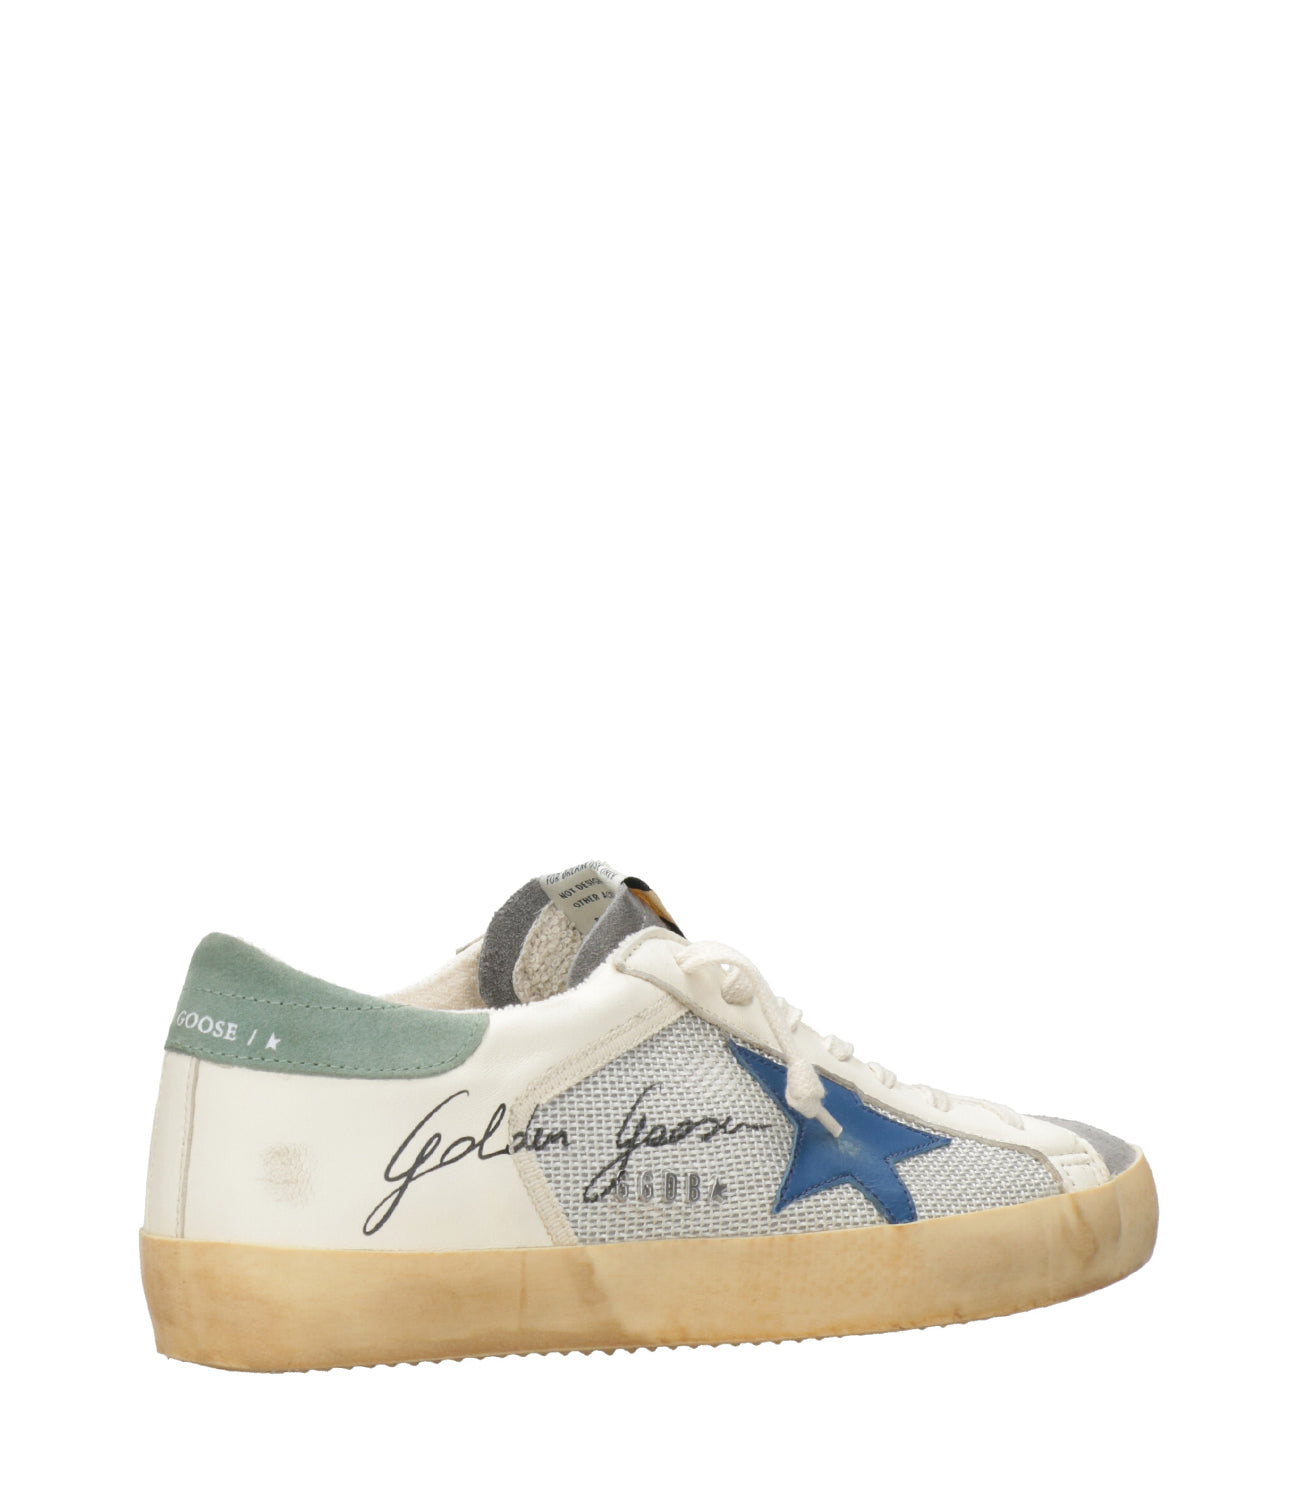 Golden Goose | Sneakers Superstar Gricio, Bianco e Blu